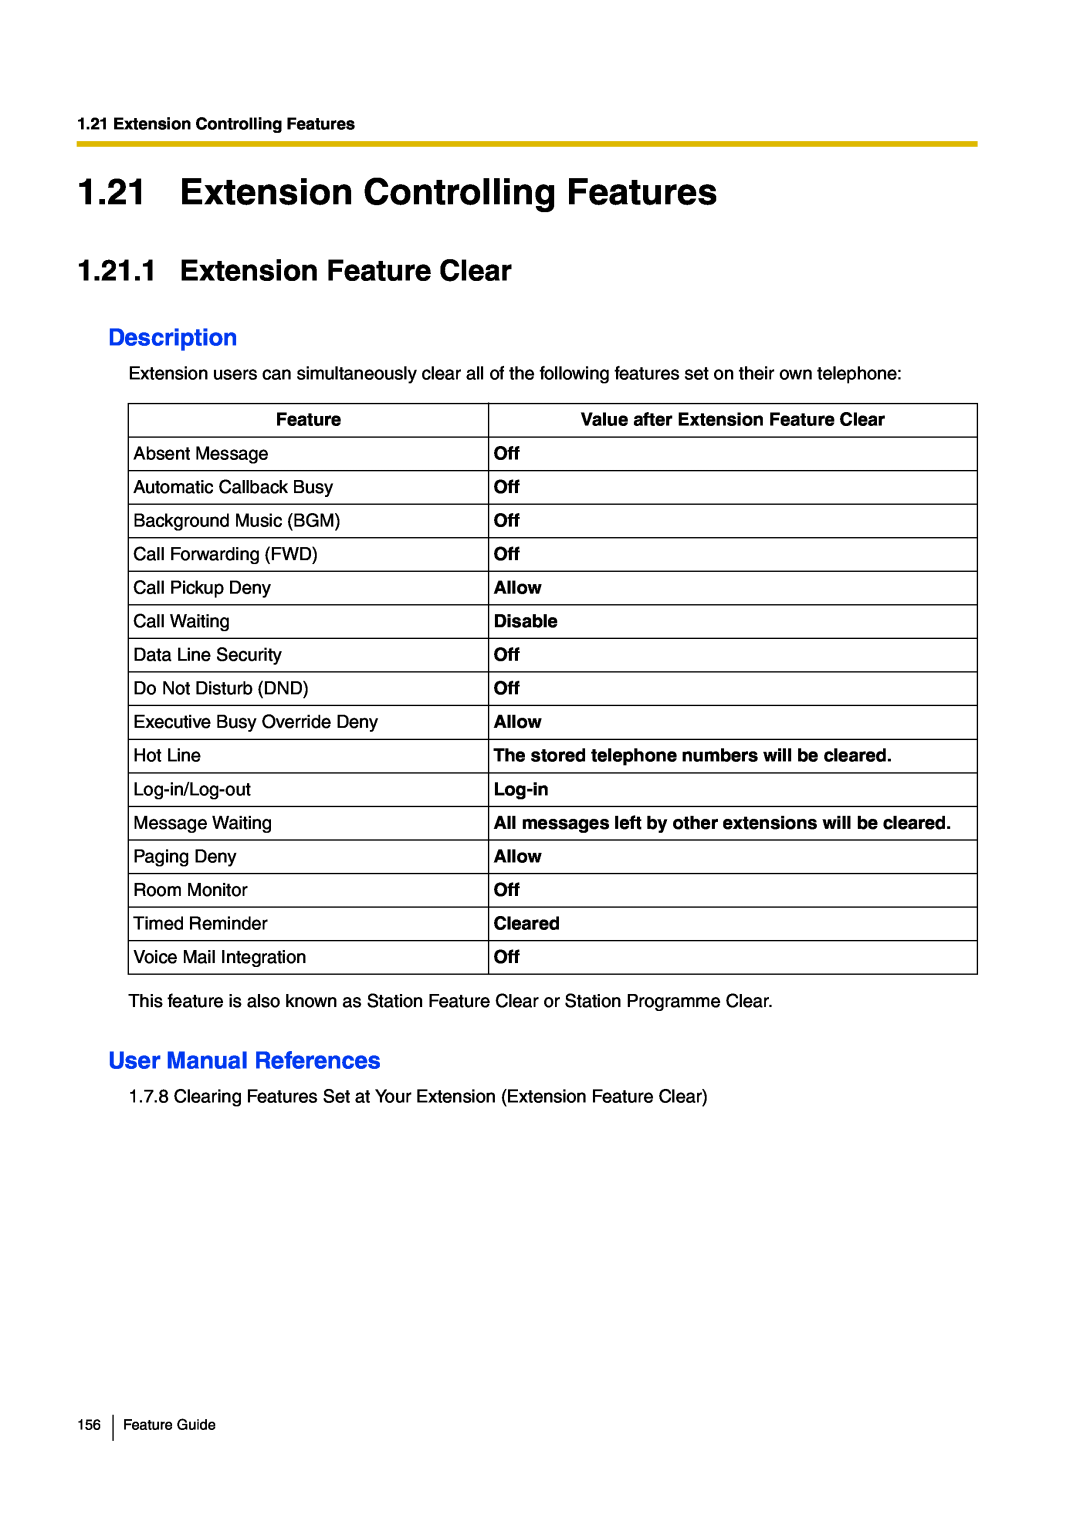 Panasonic kx-tea308 Extension Controlling Features, Extension Feature Clear, Description, User Manual References, Allow 